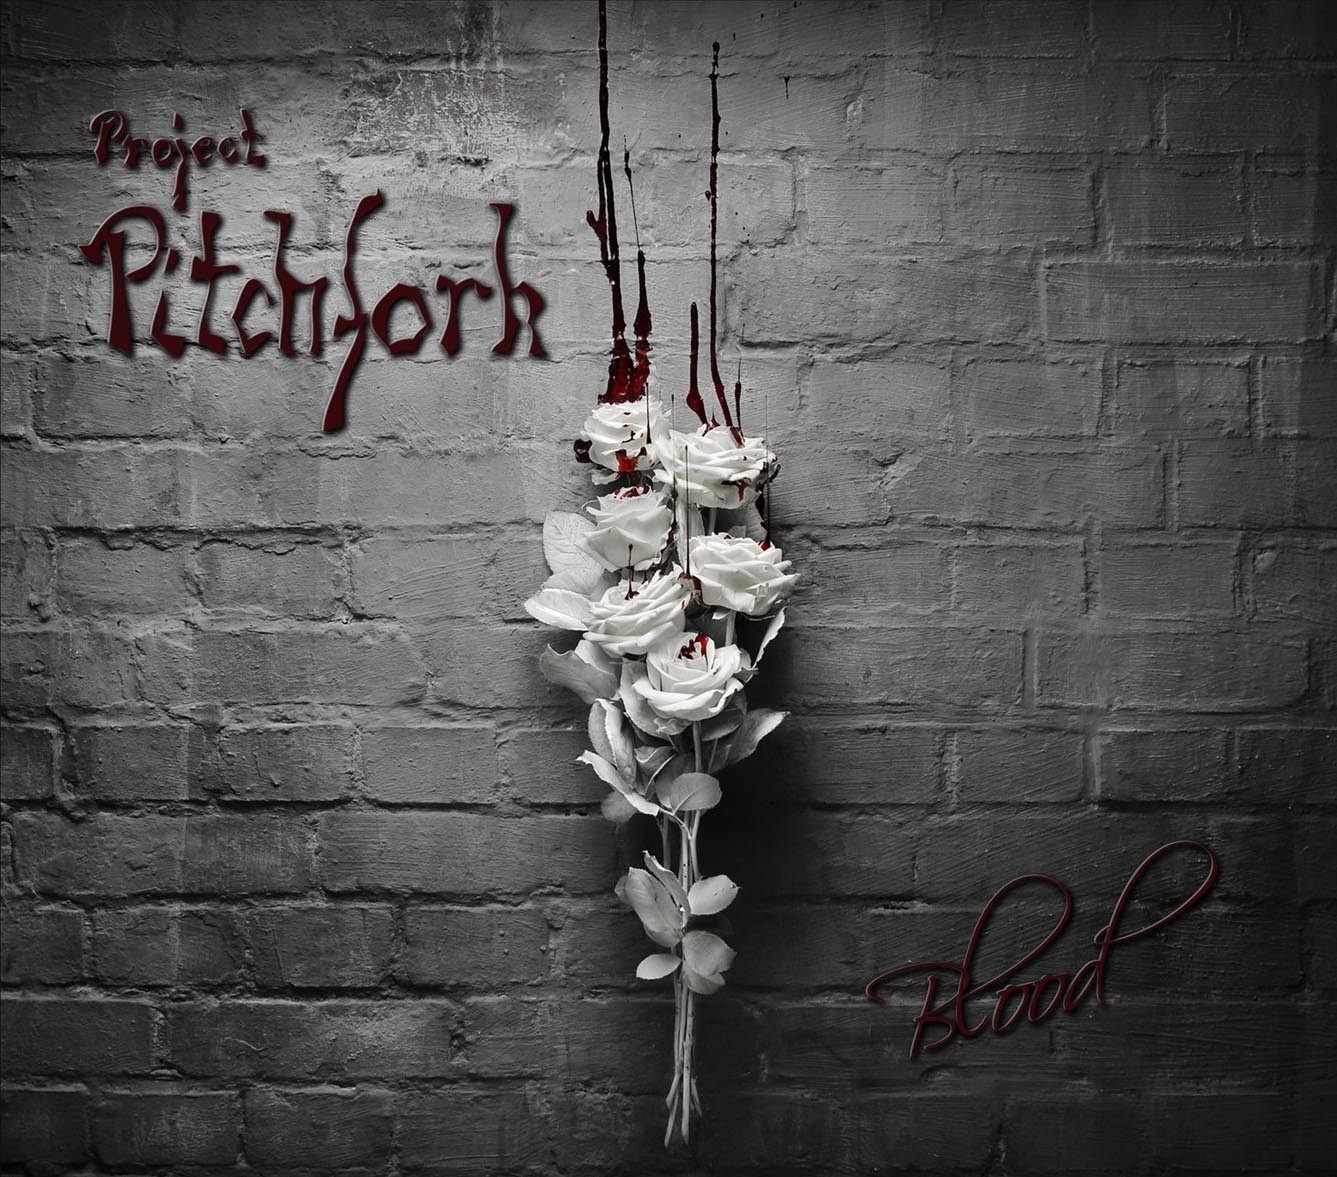 Project Pitchfork - Blood